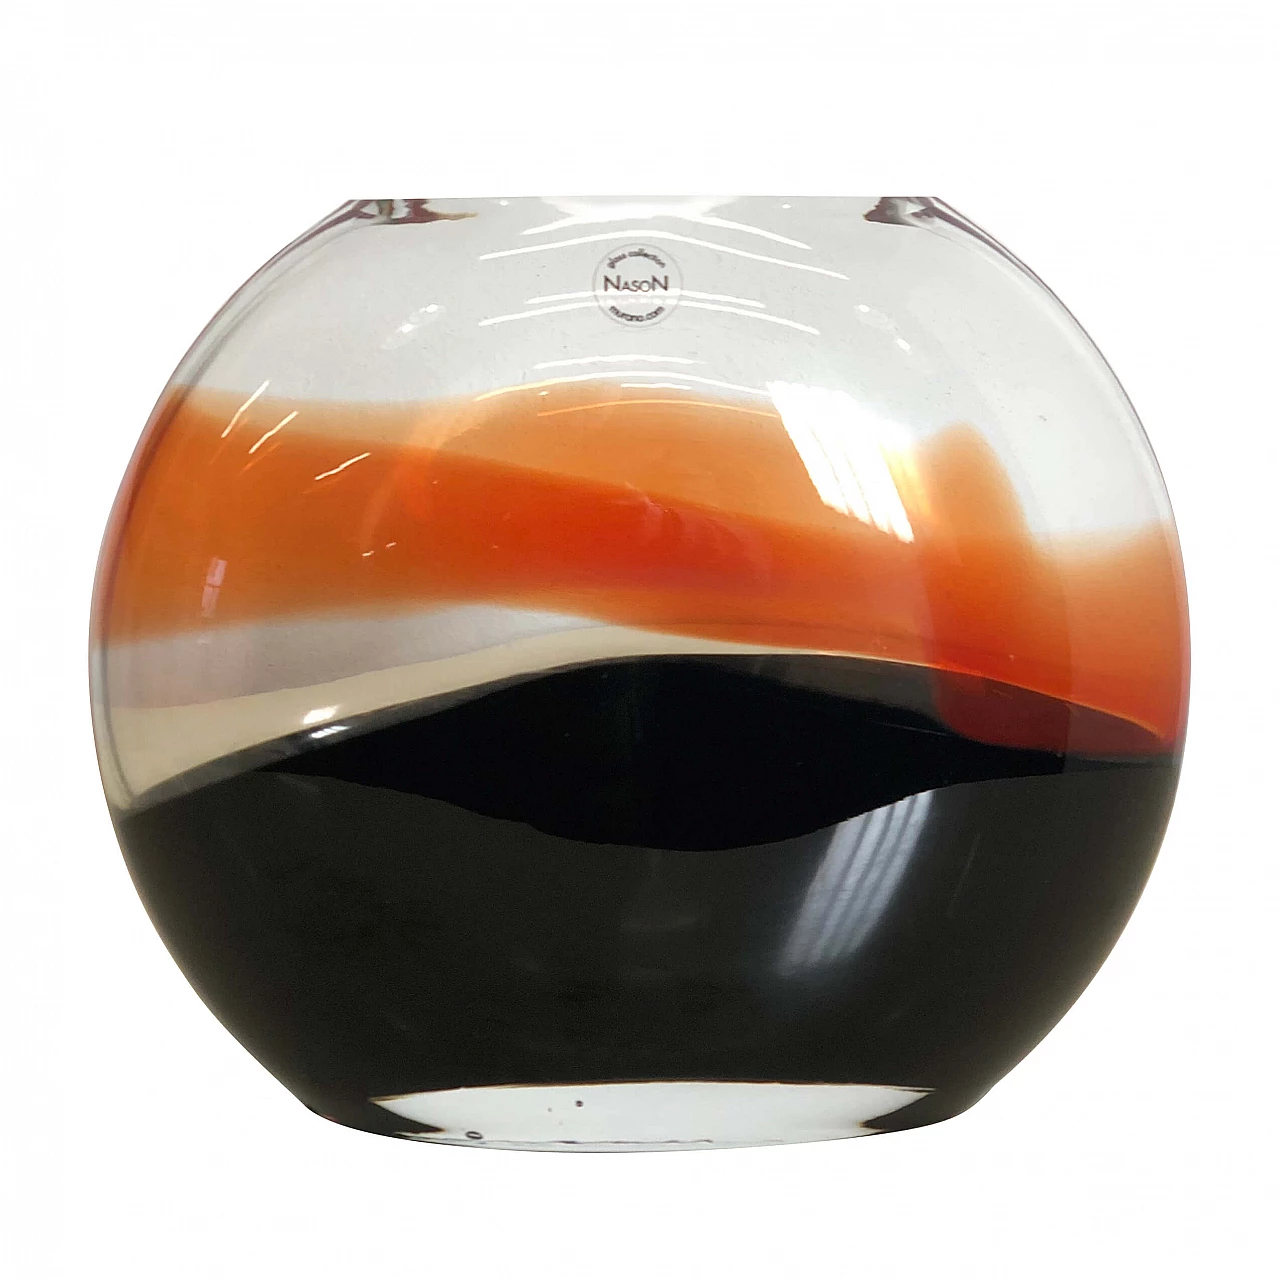 Murano glass vase by Nason, 70s 1202049